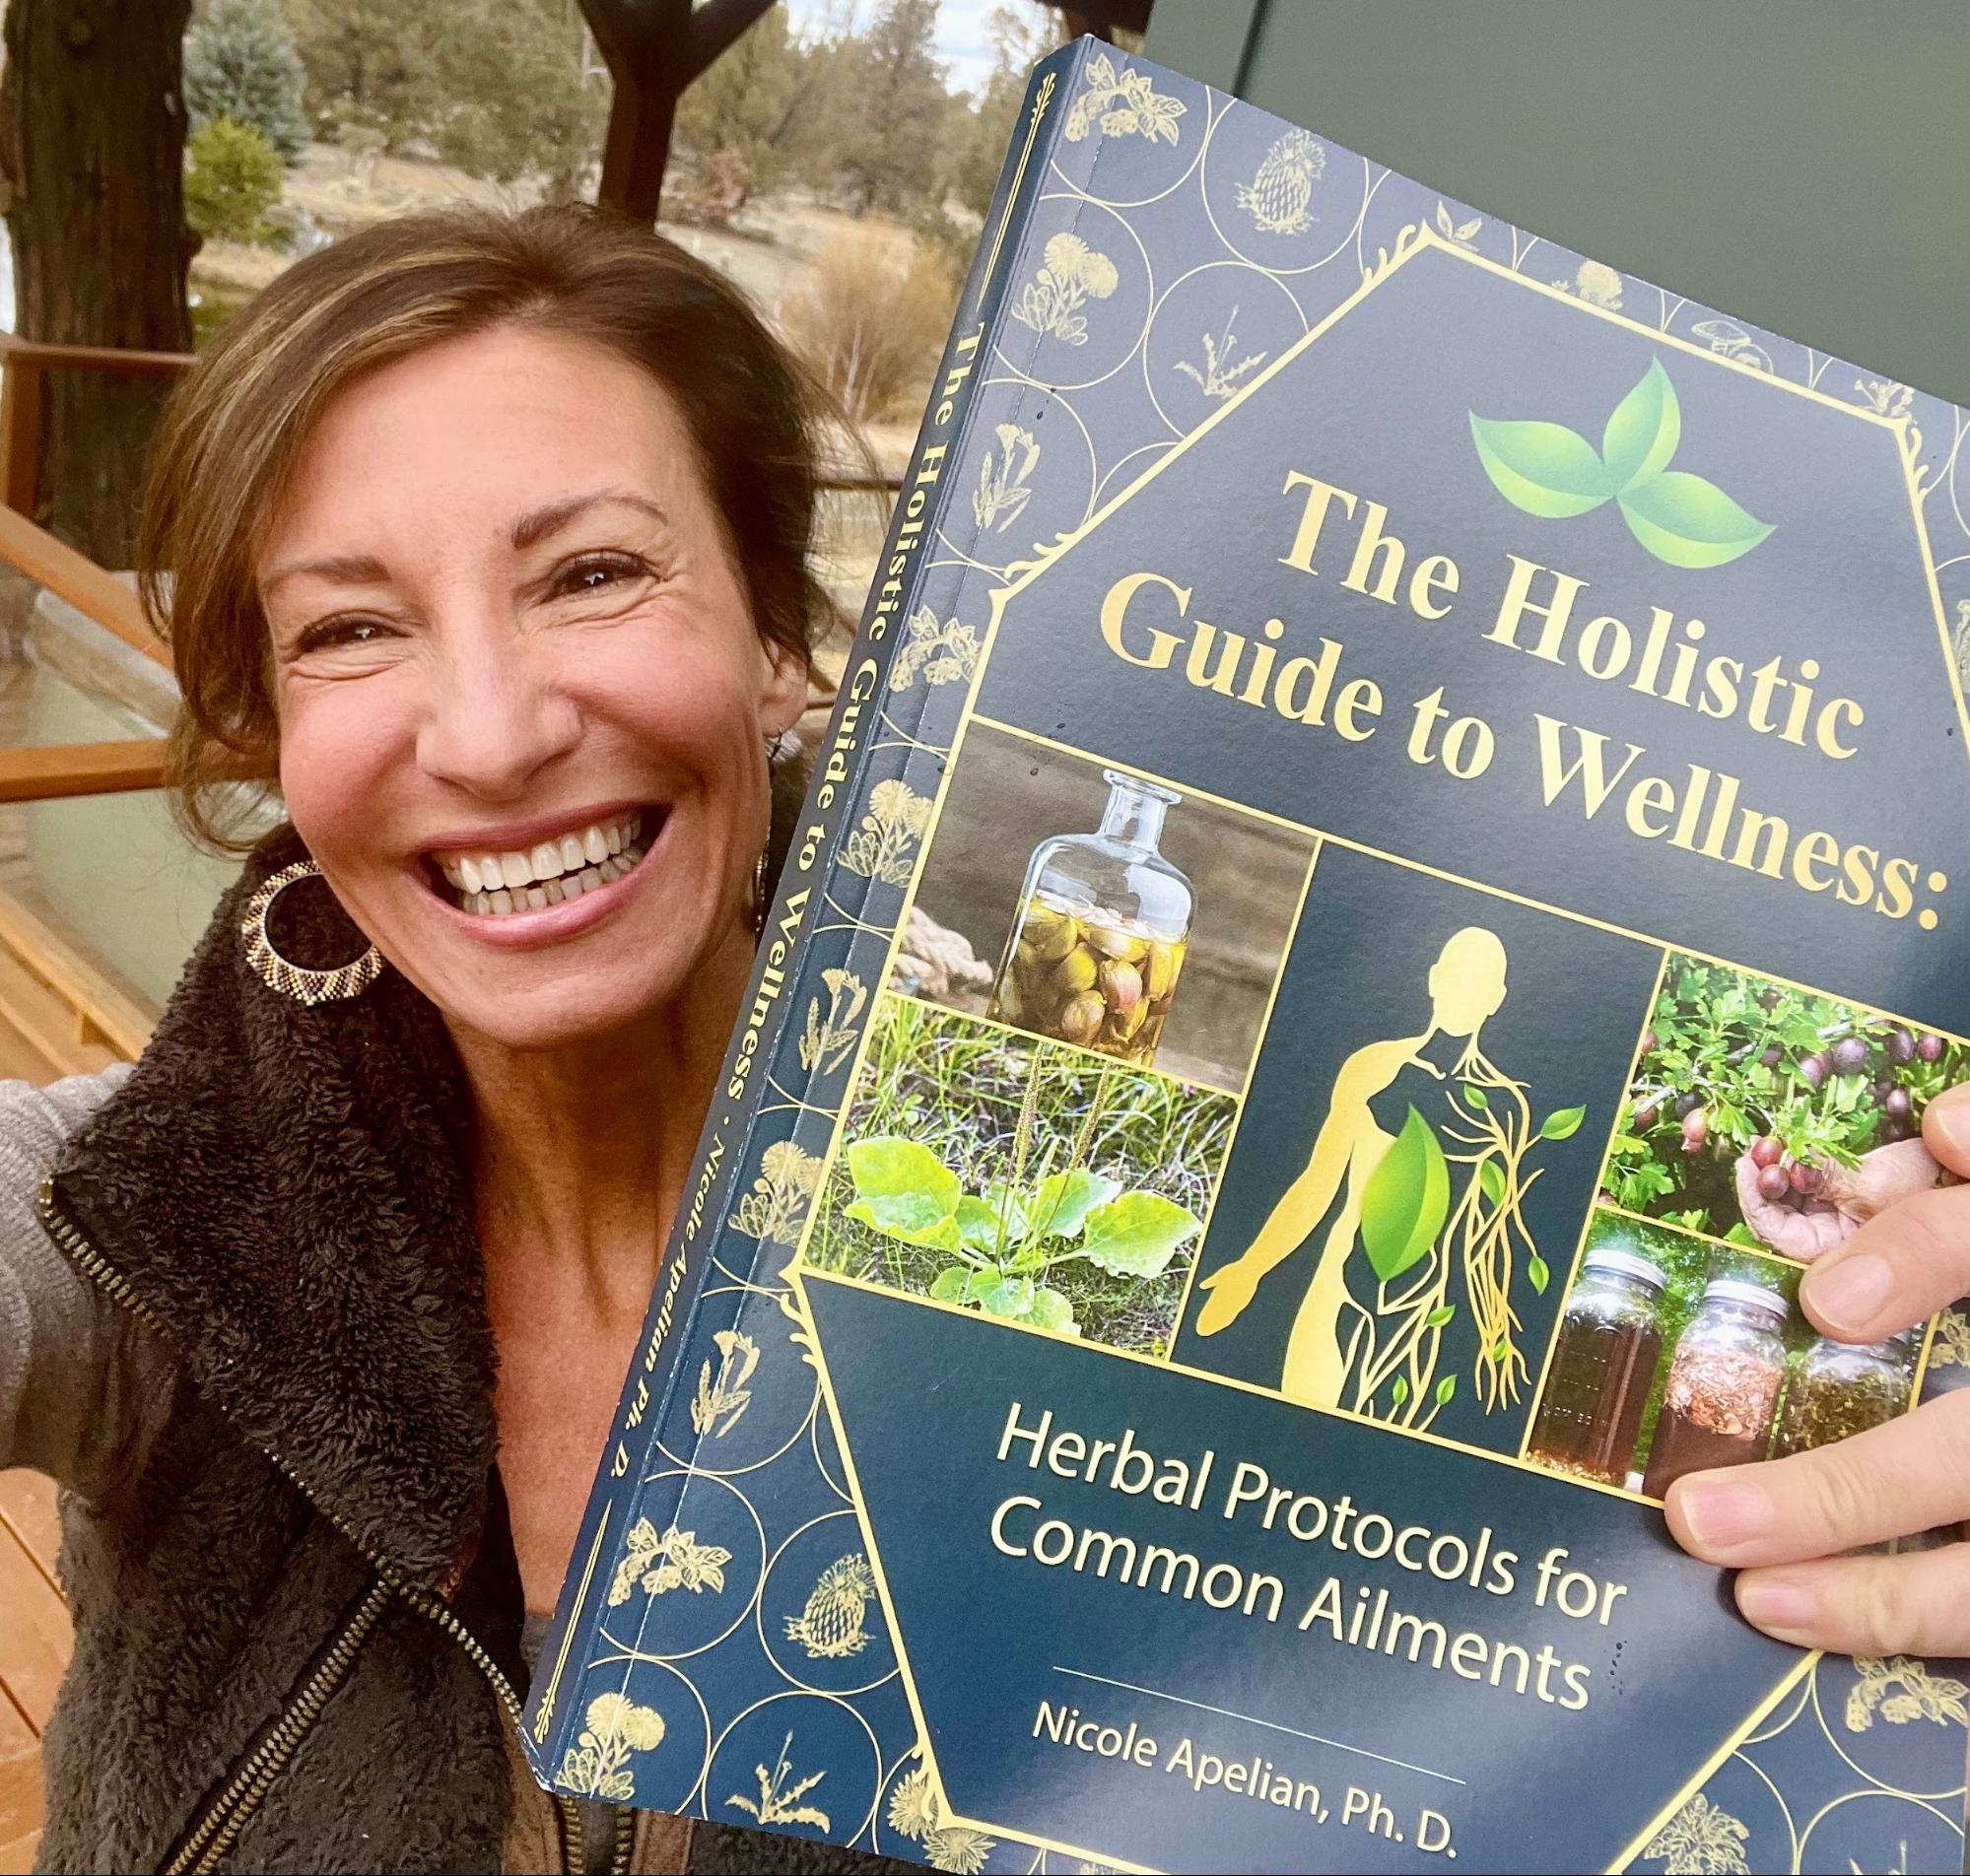 Nicole Apelian holding her Holistic Guide to Wellness book